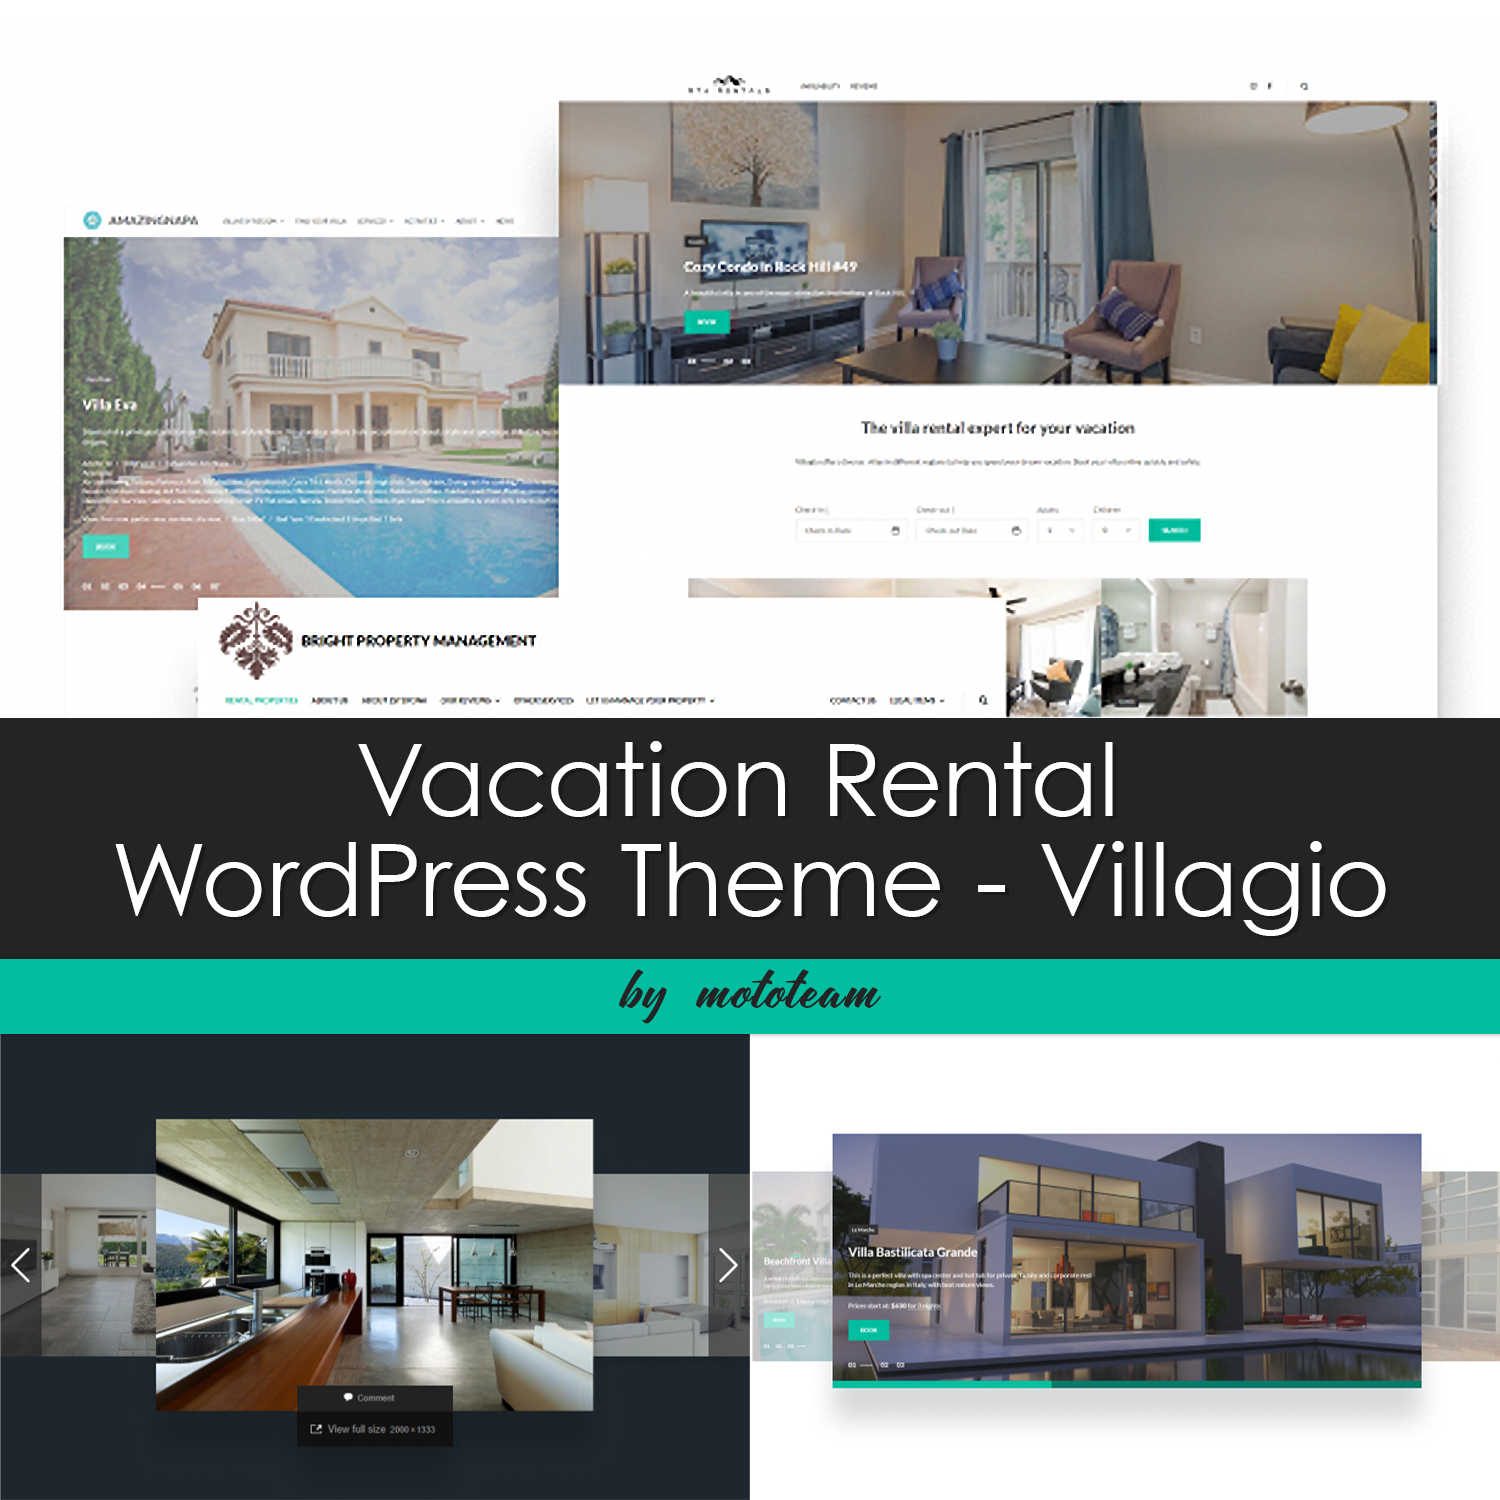 Preview vacation rental wordpress theme villagio.